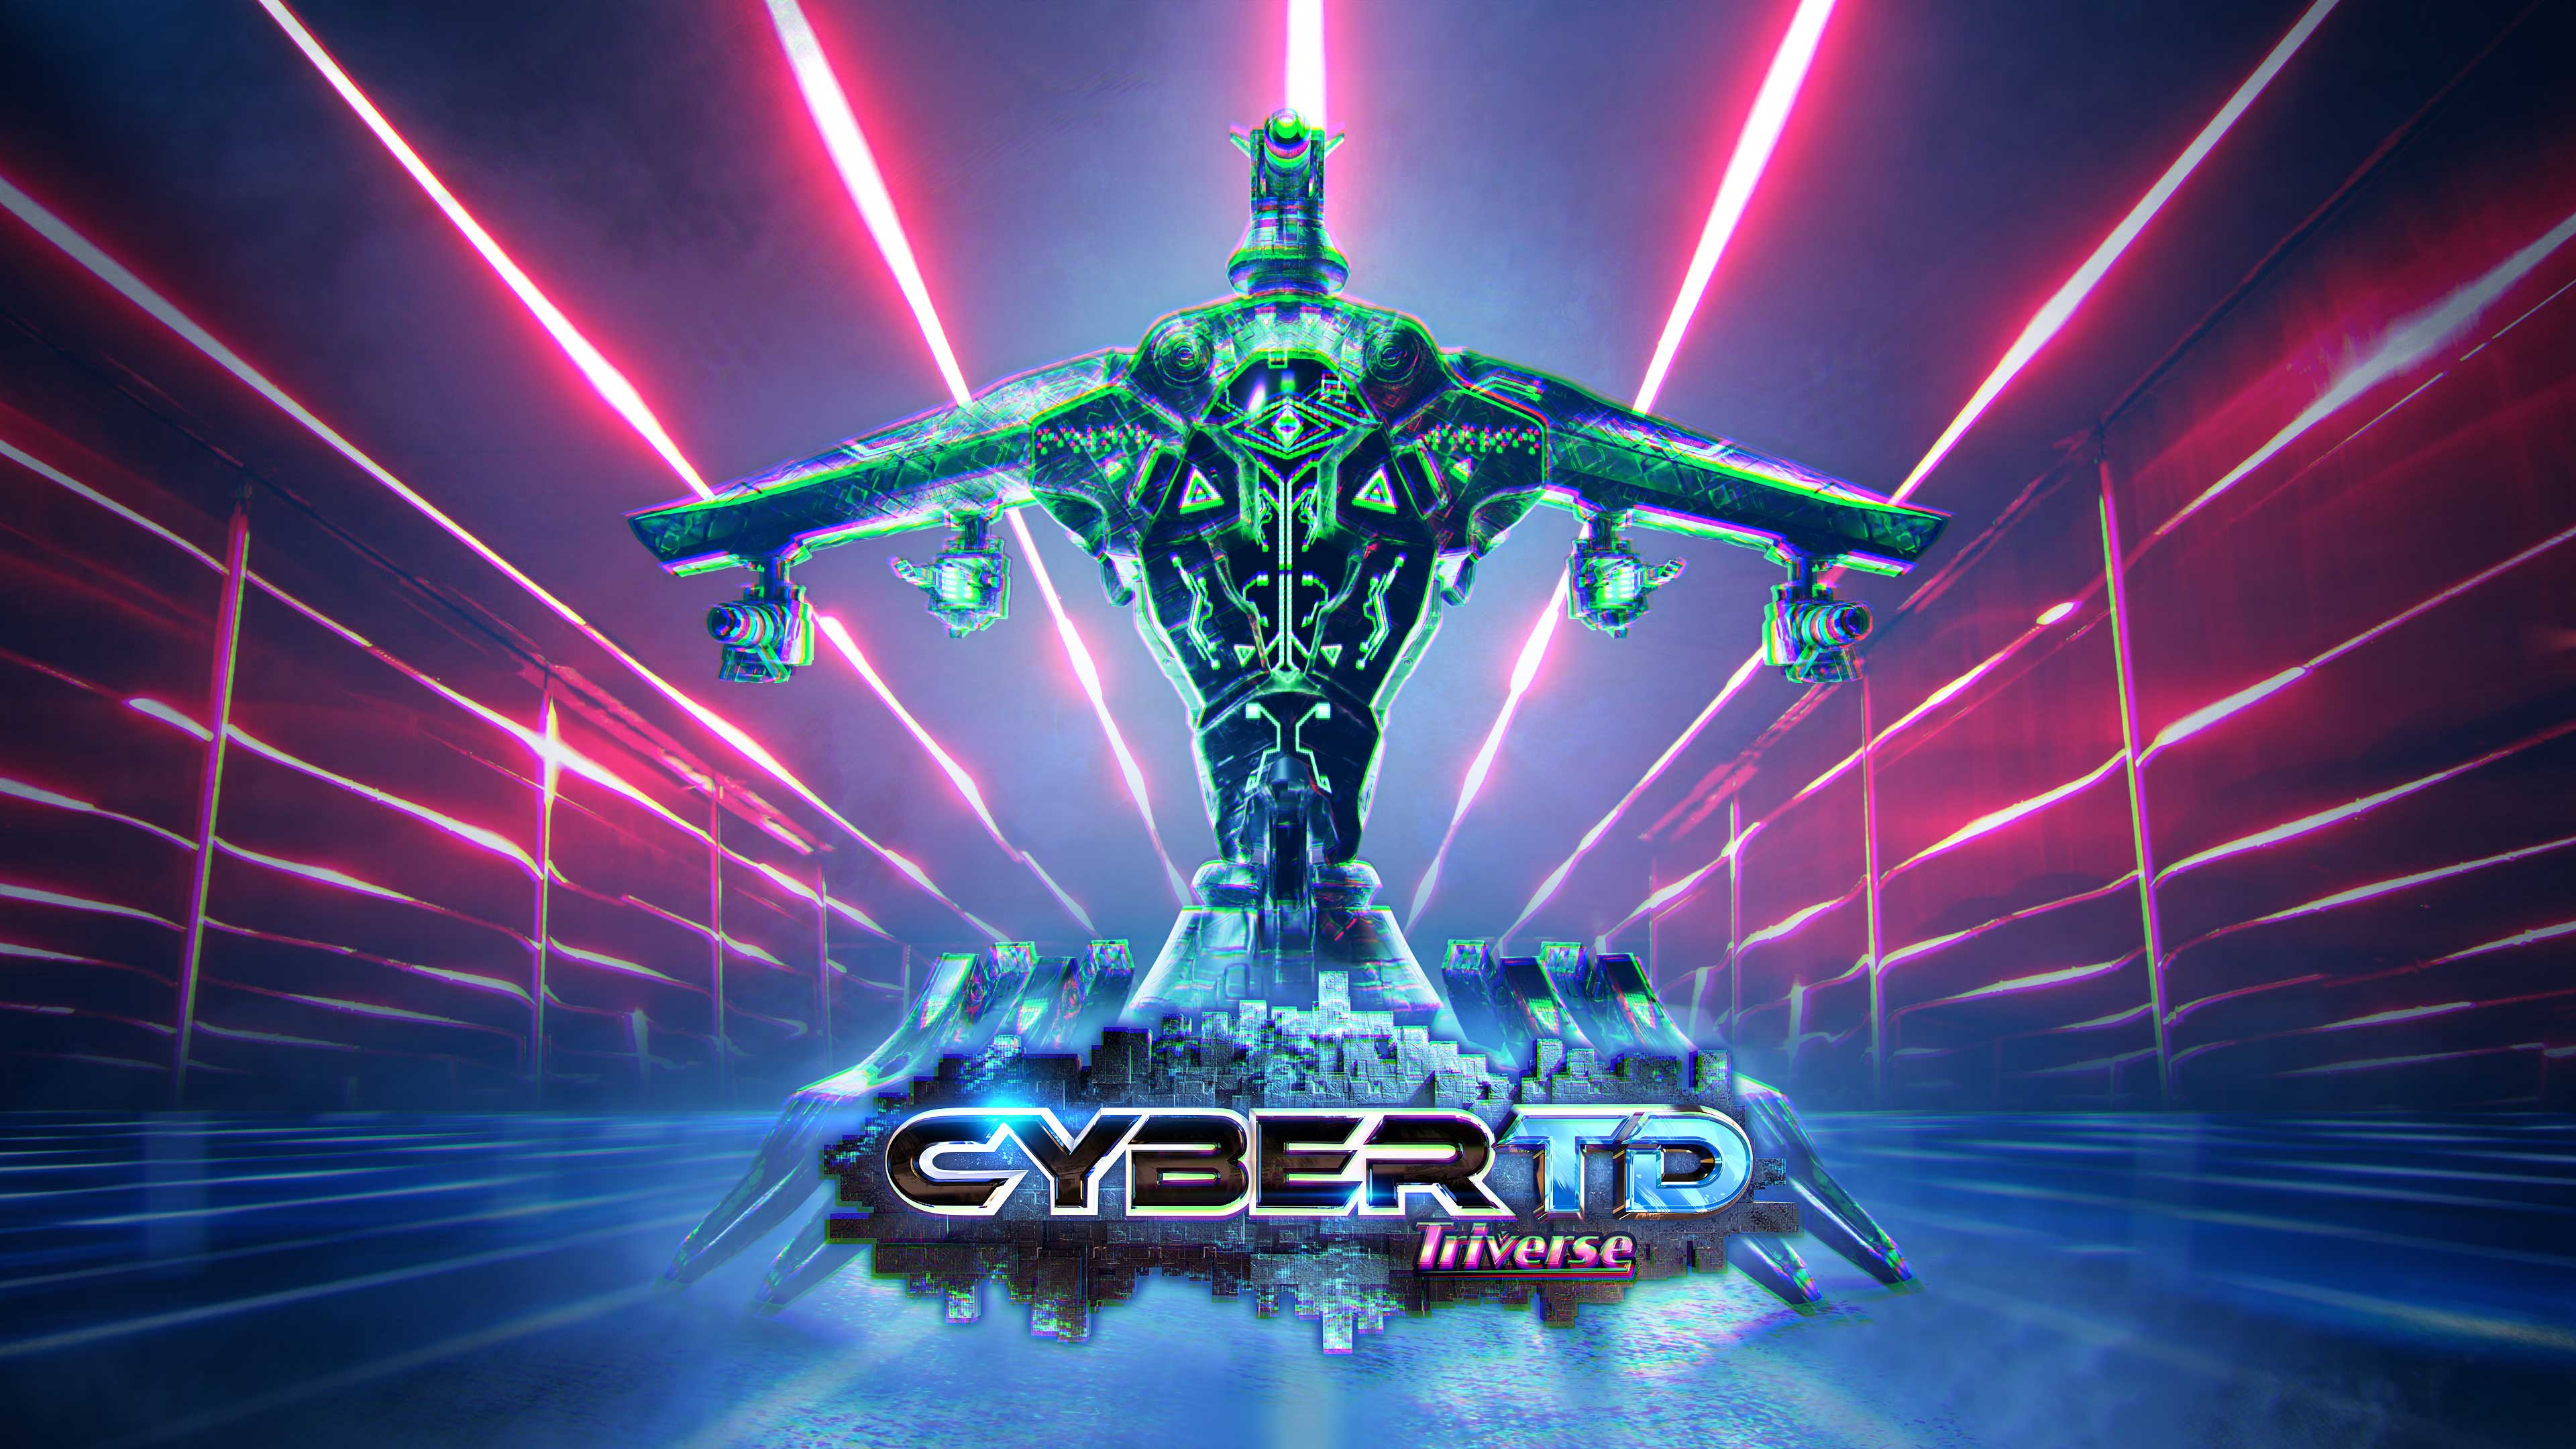 CyberTD key art